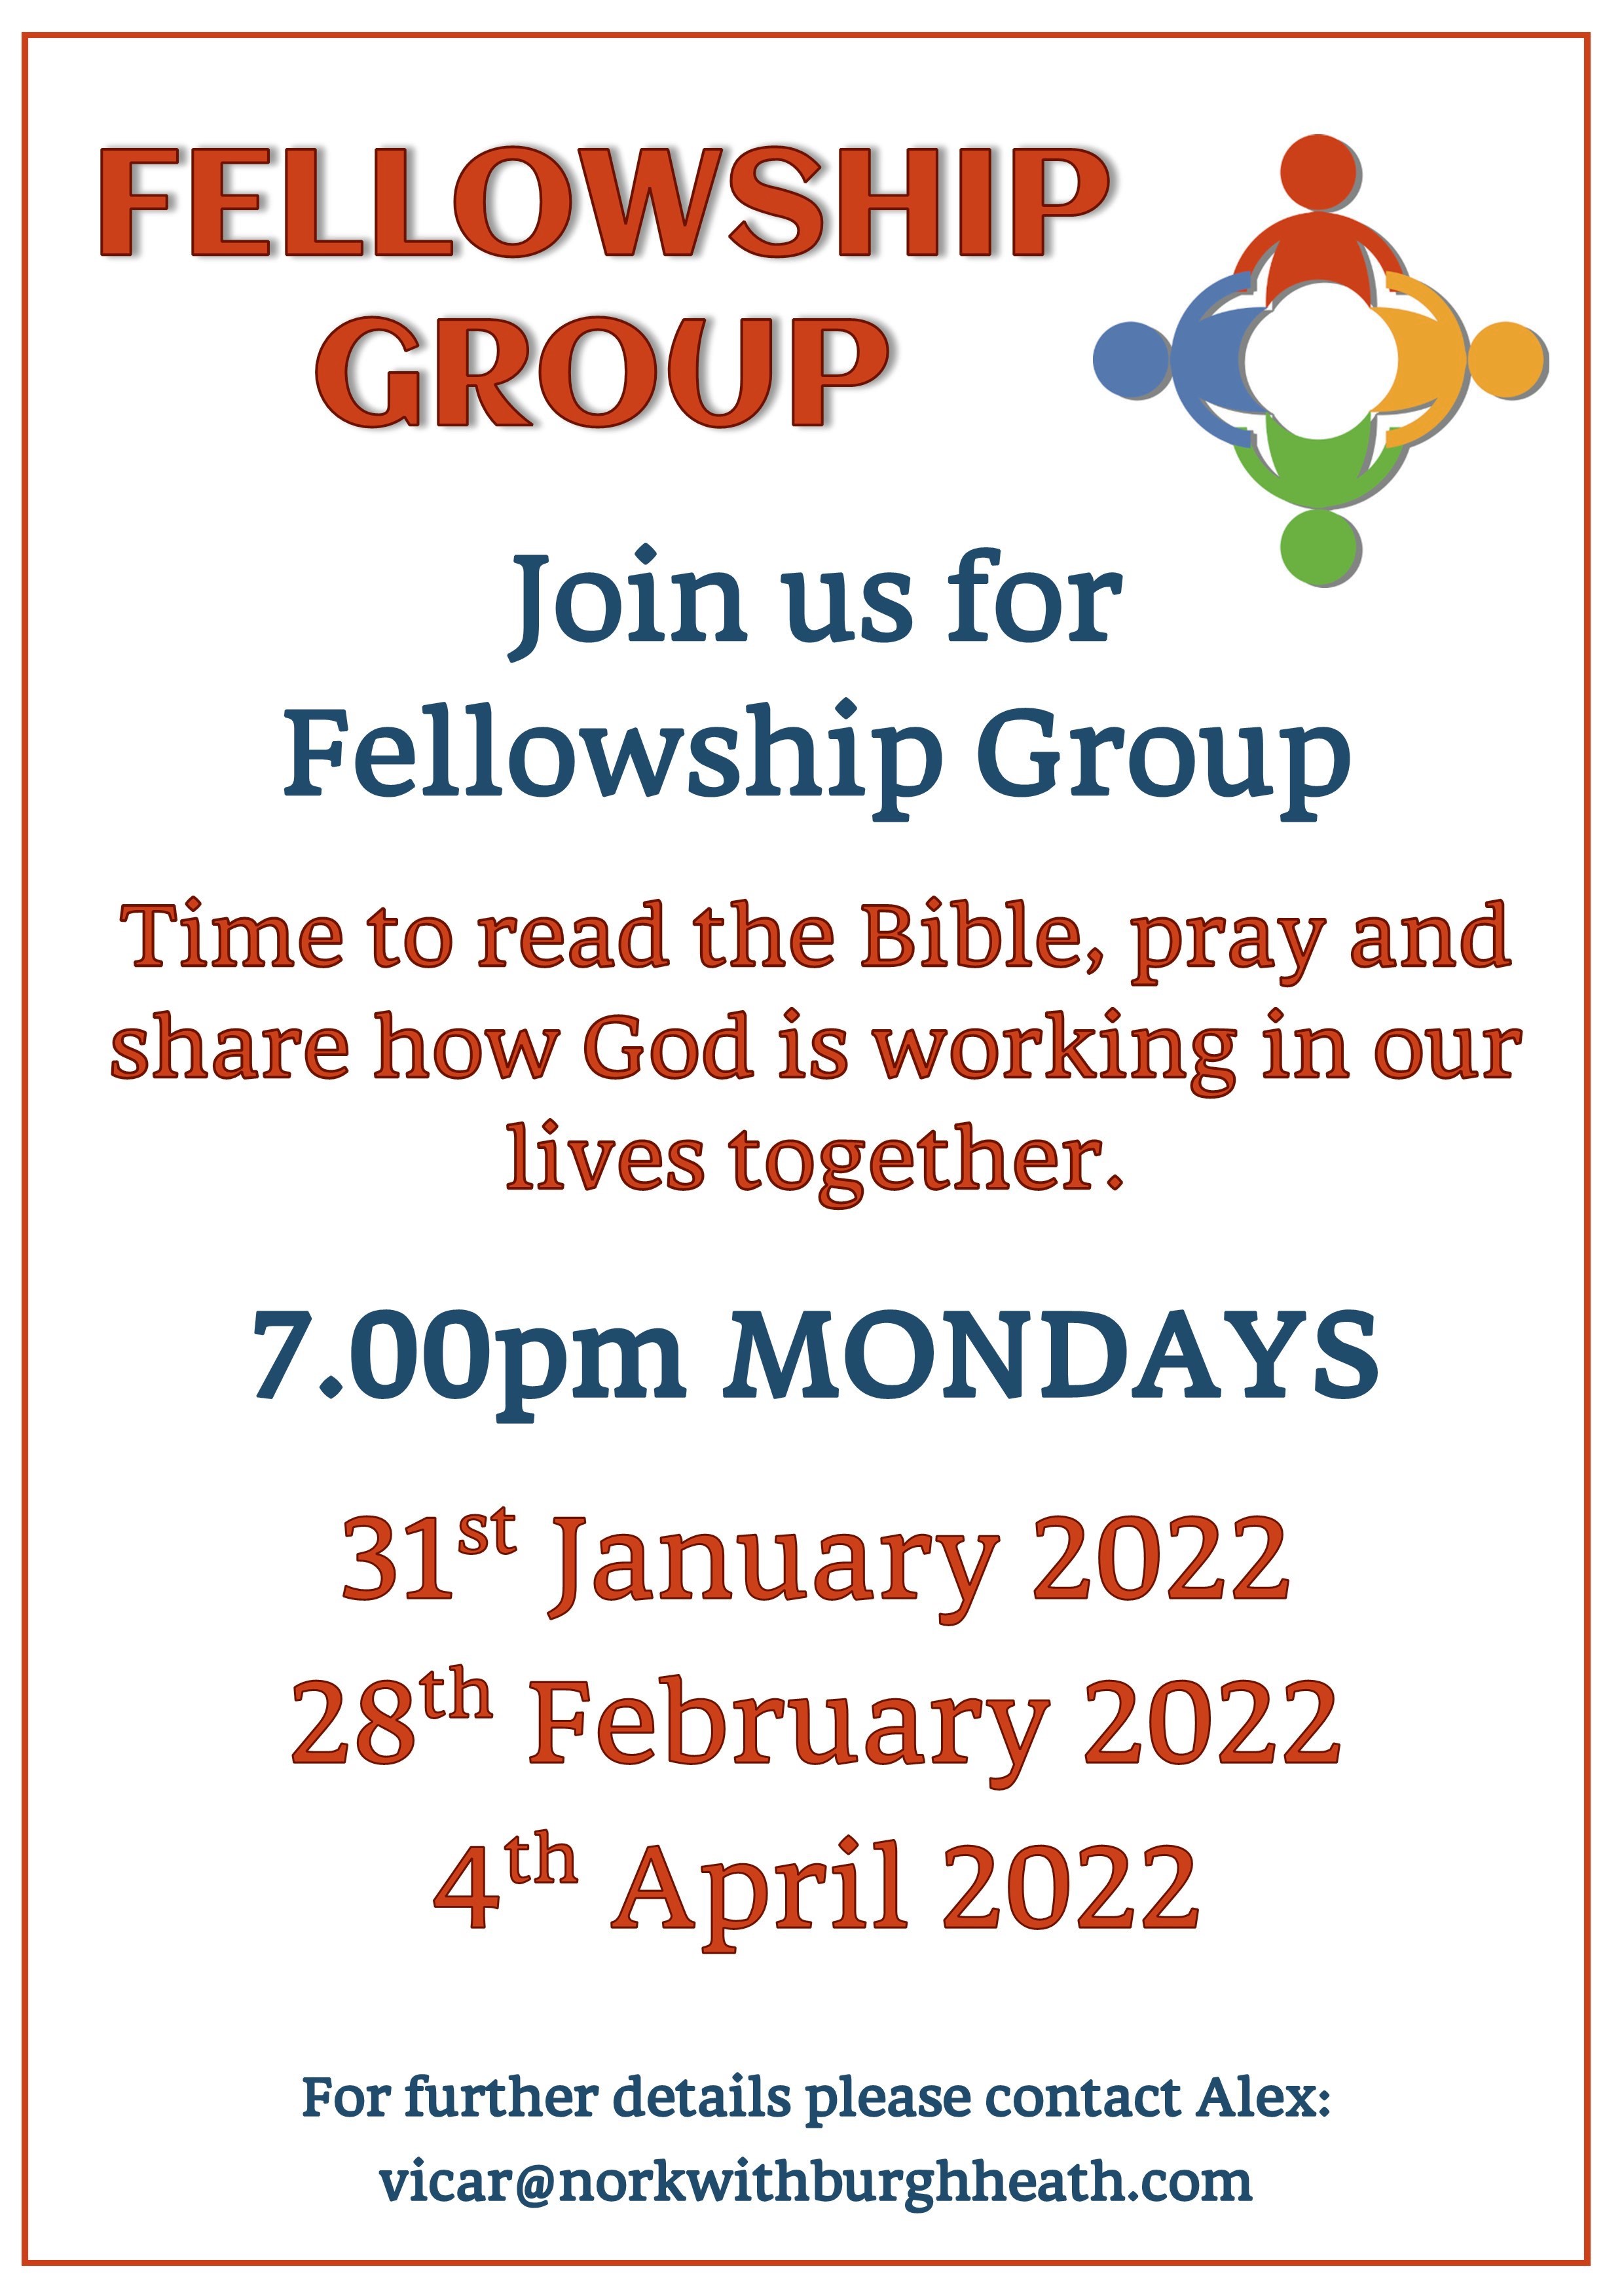 Fellowship Group Flyer